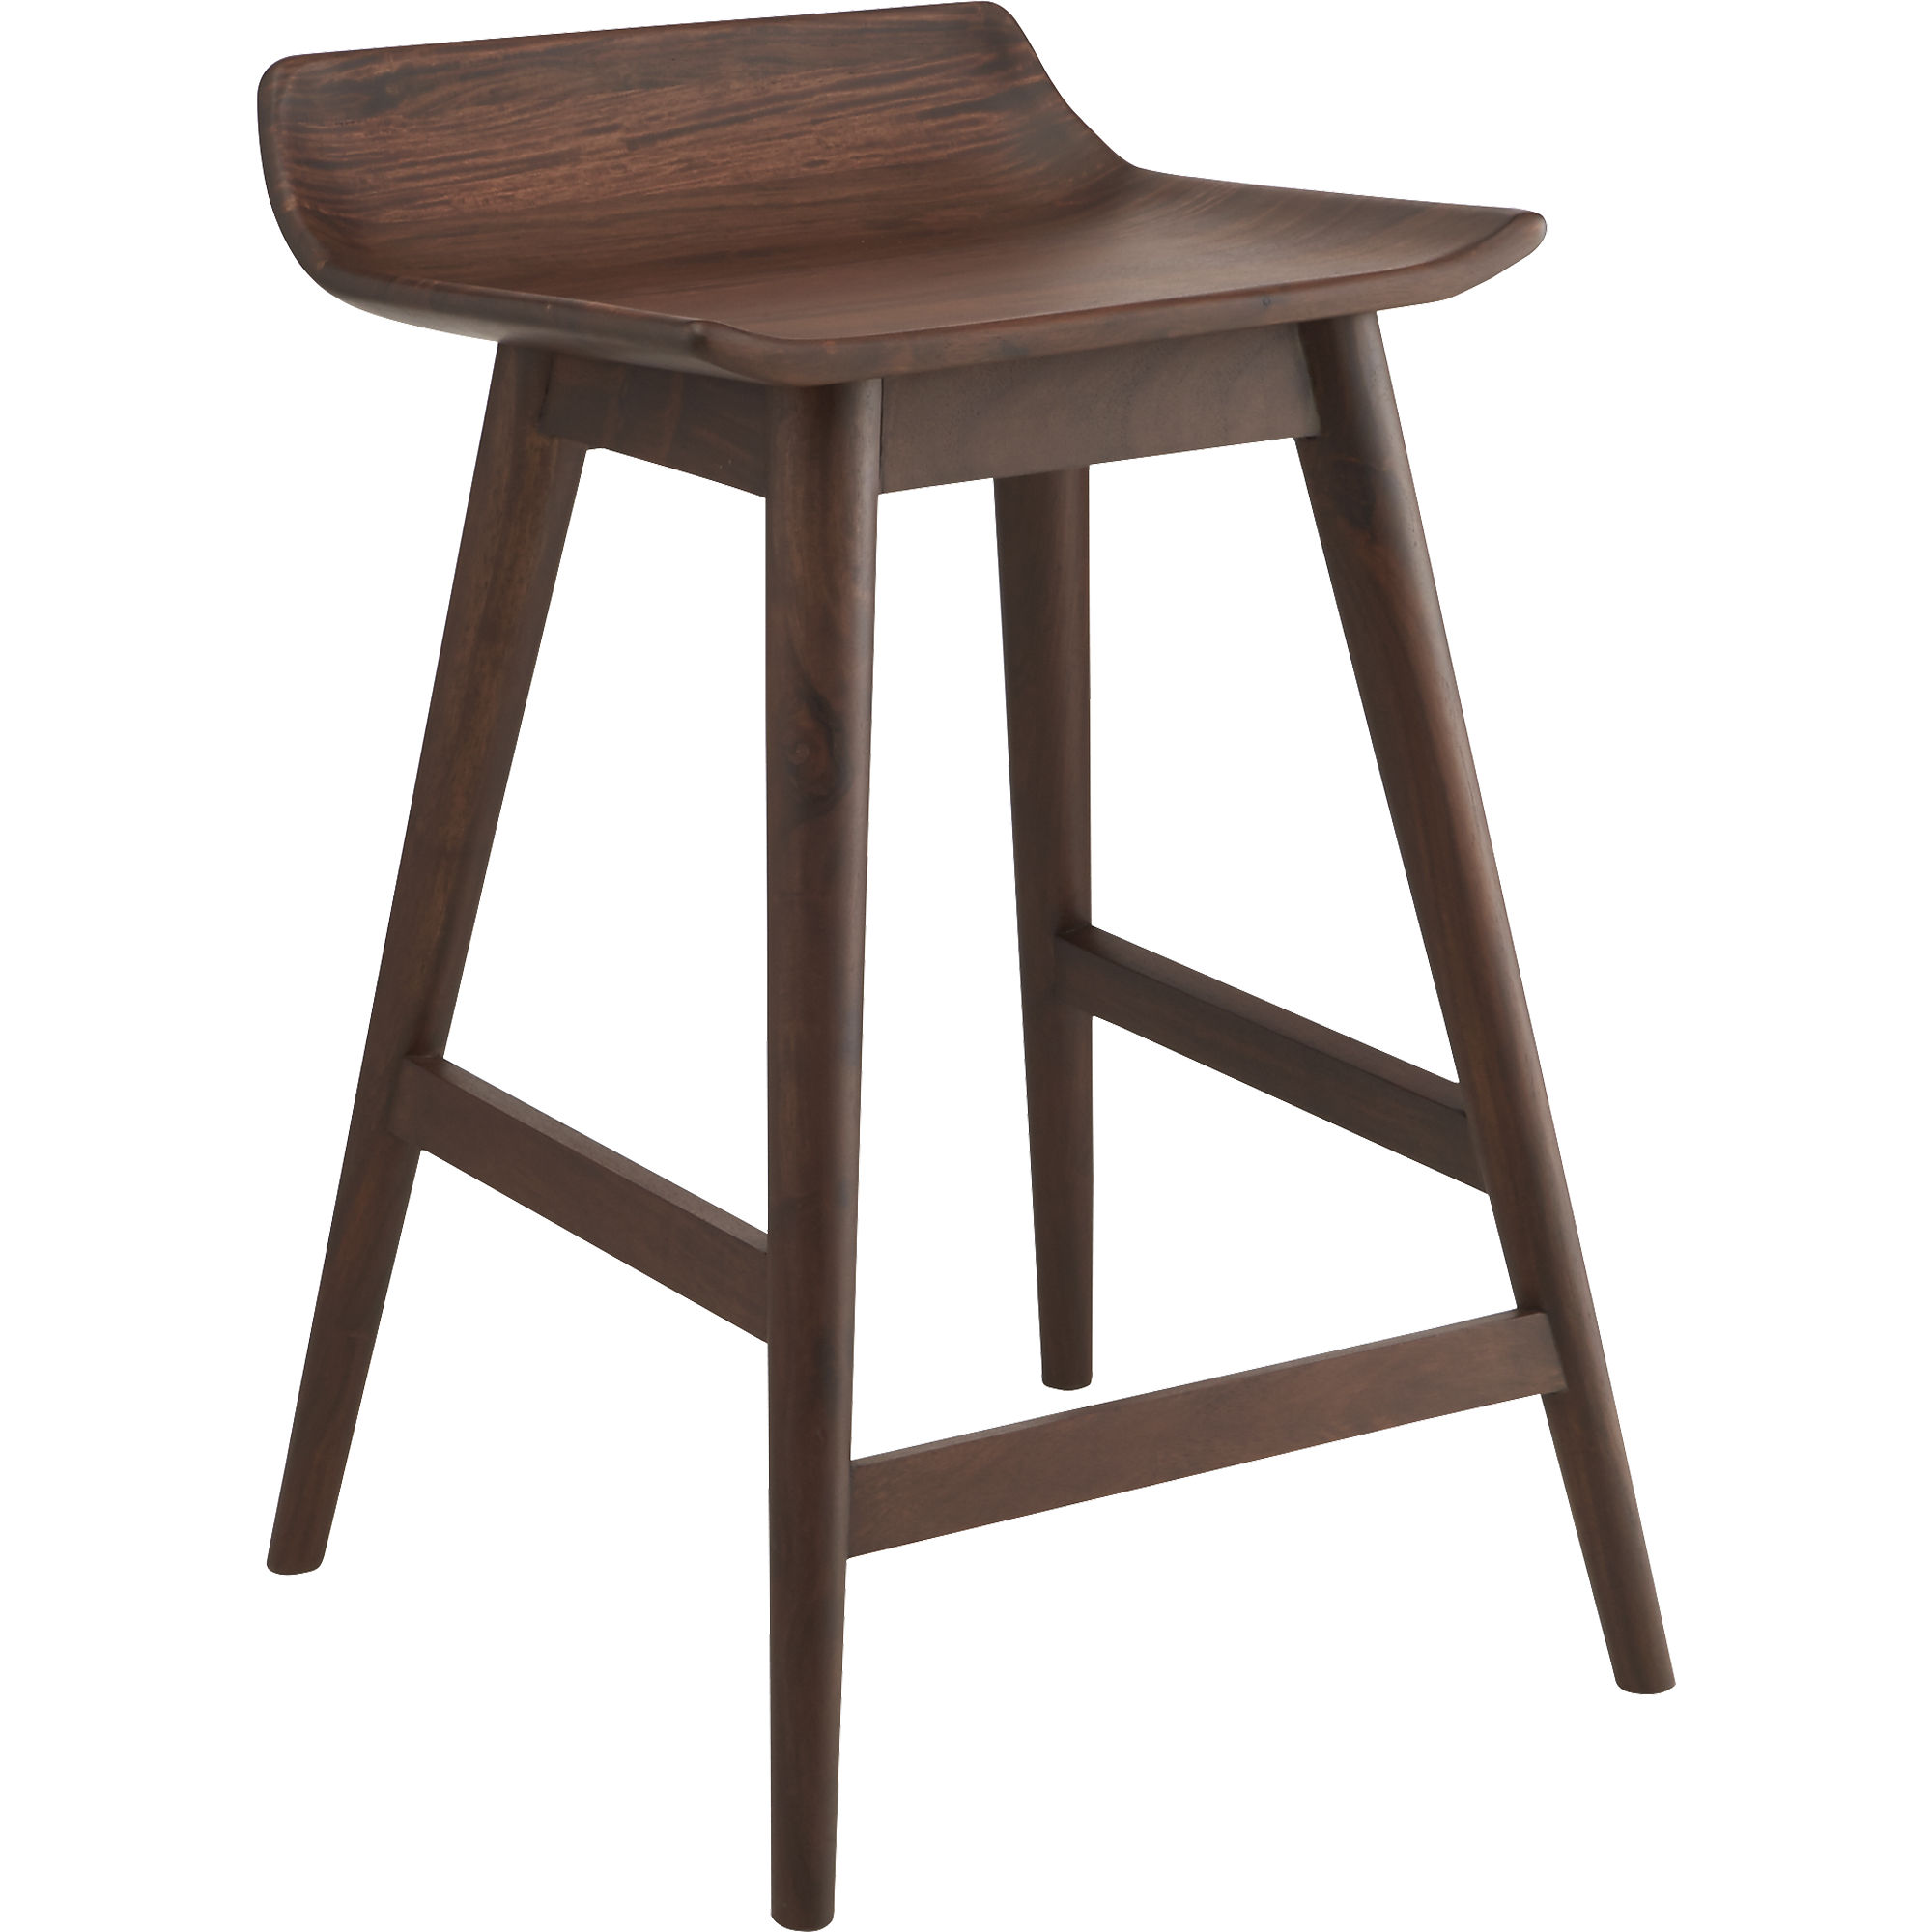 wainscott-bar-stools (4)